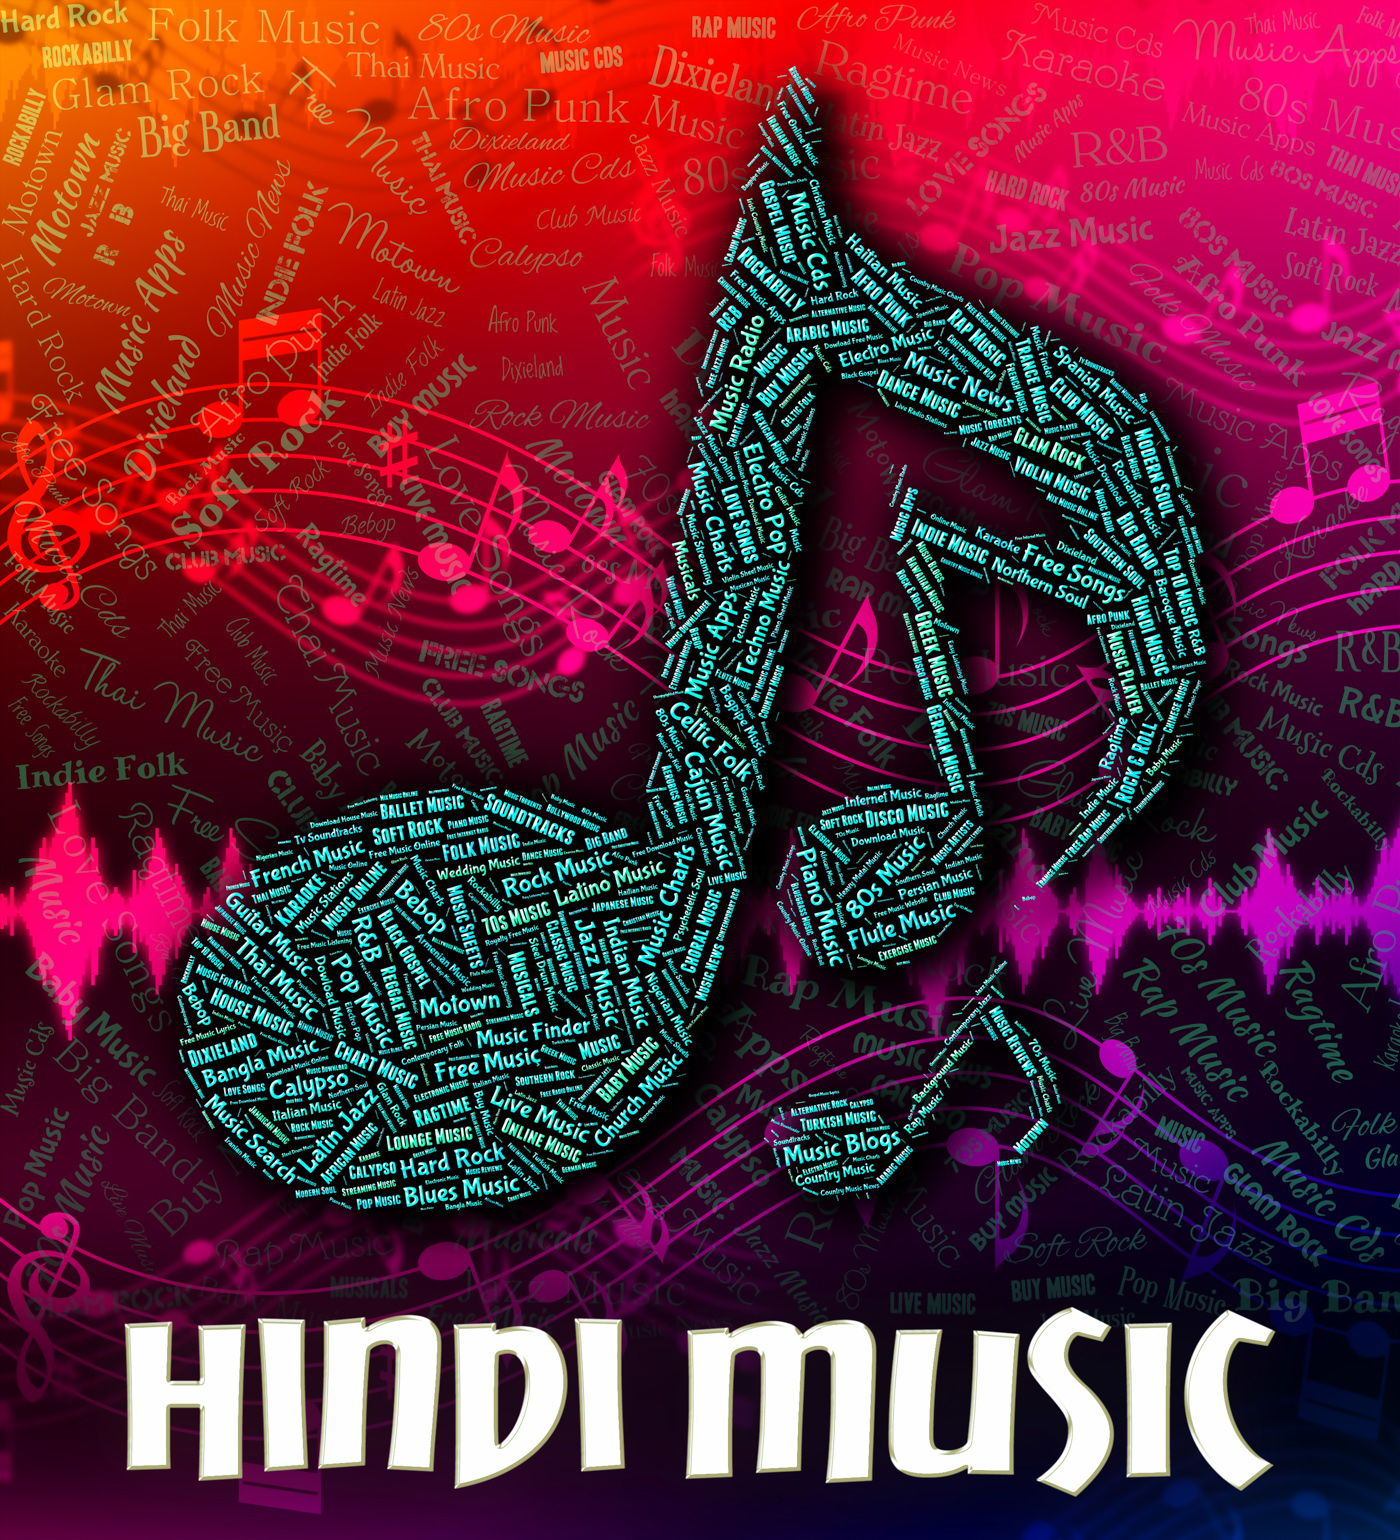 Hindi music represents sound tracks and hindustani photo